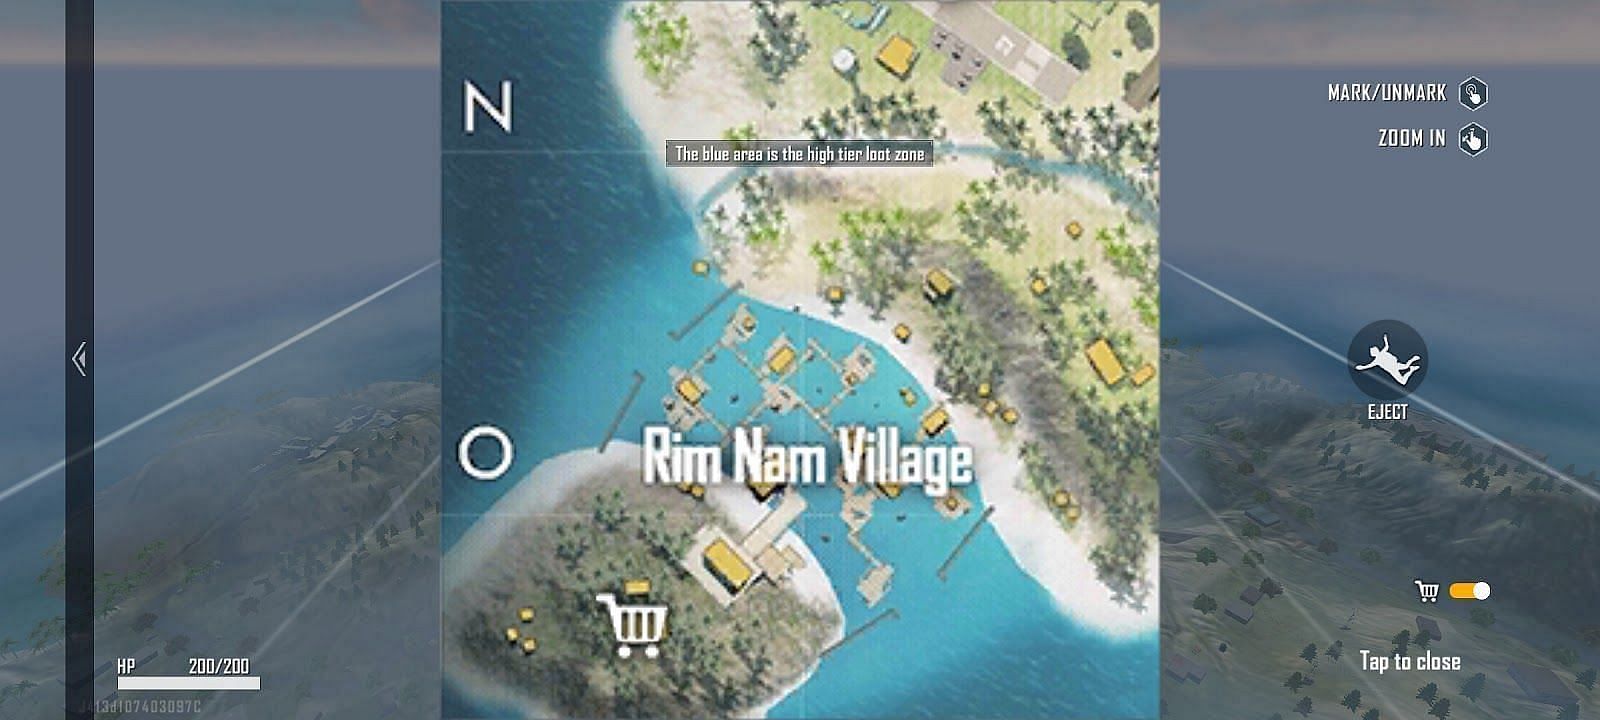 Rim Nam Village in Bermuda (Image via Free Fire)